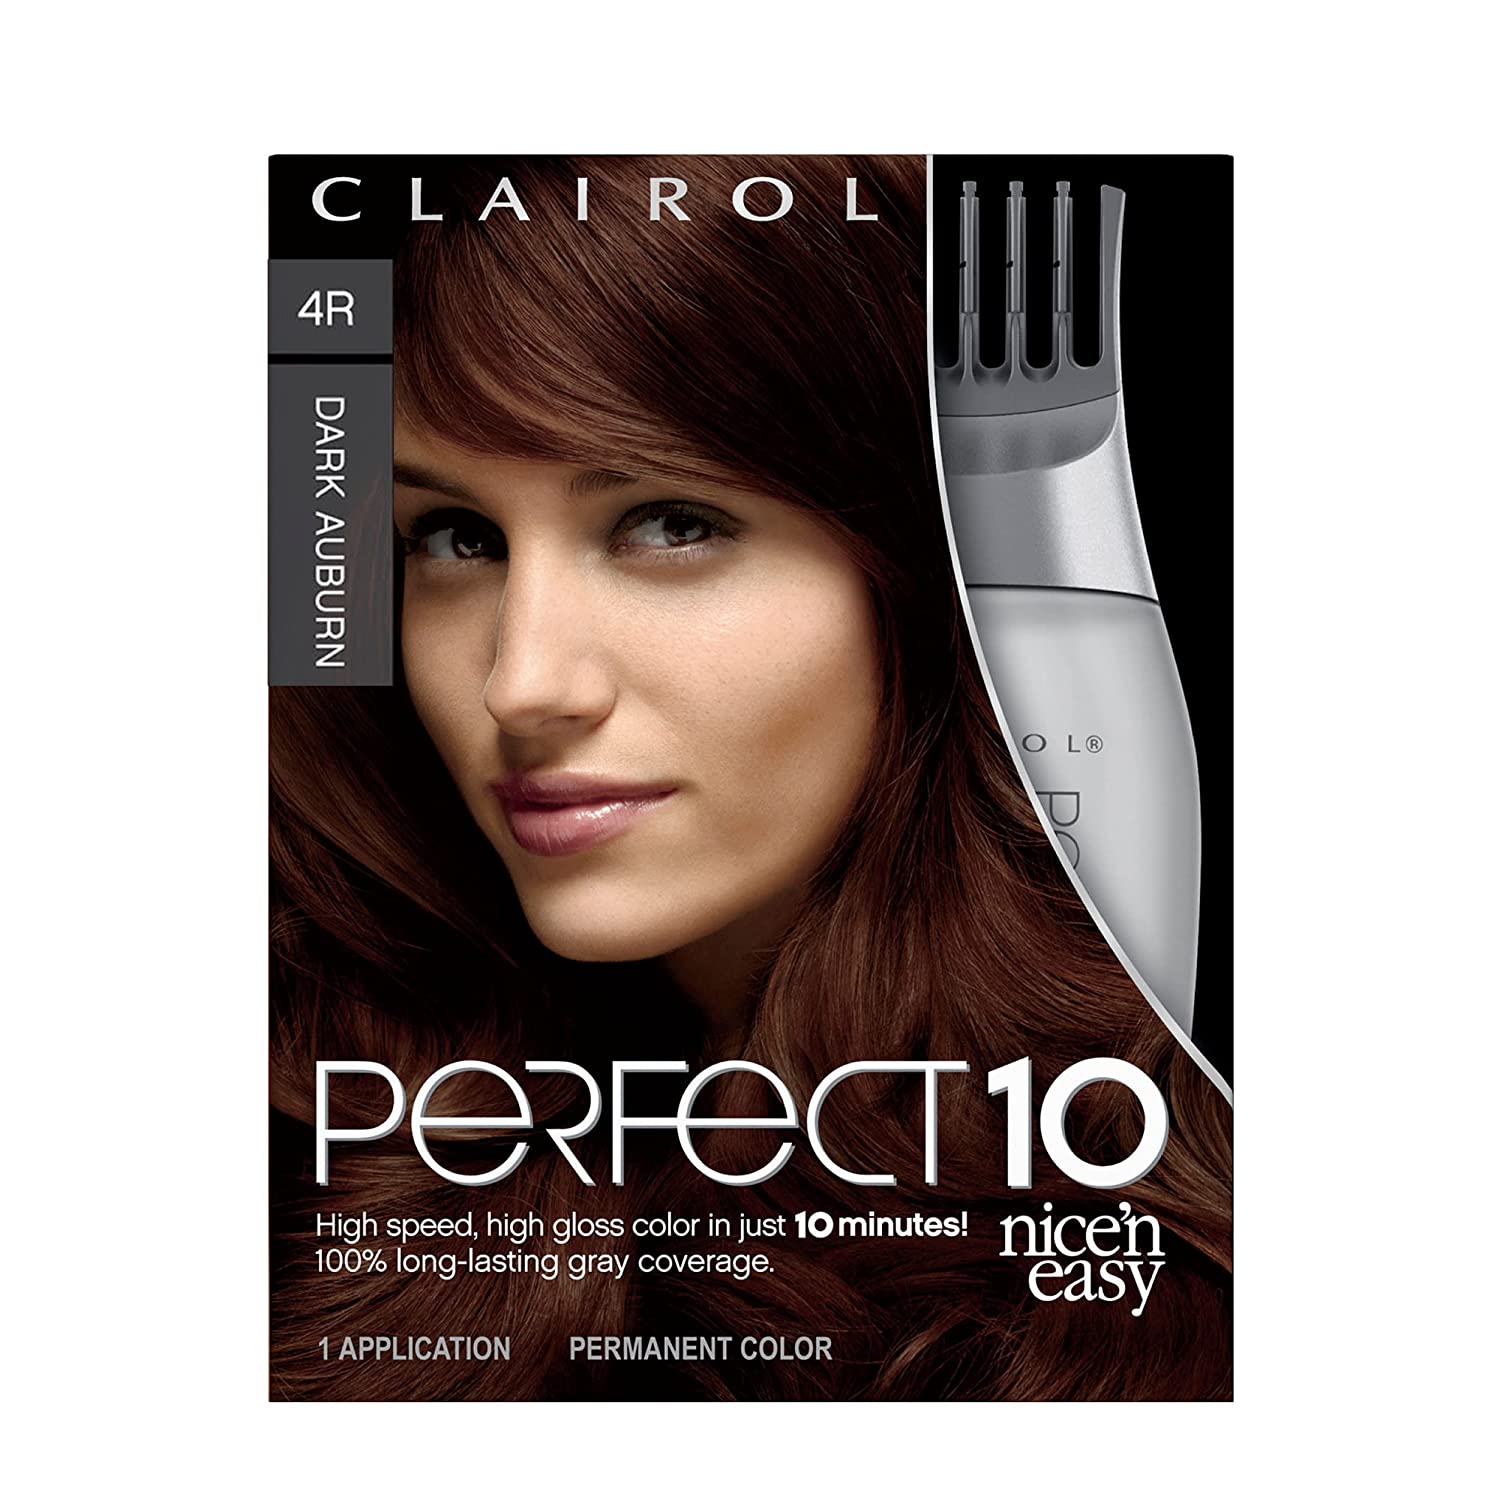 Clairol Nice'n Easy Perfect 10 Permanent Hair Dye Price in Pakistan